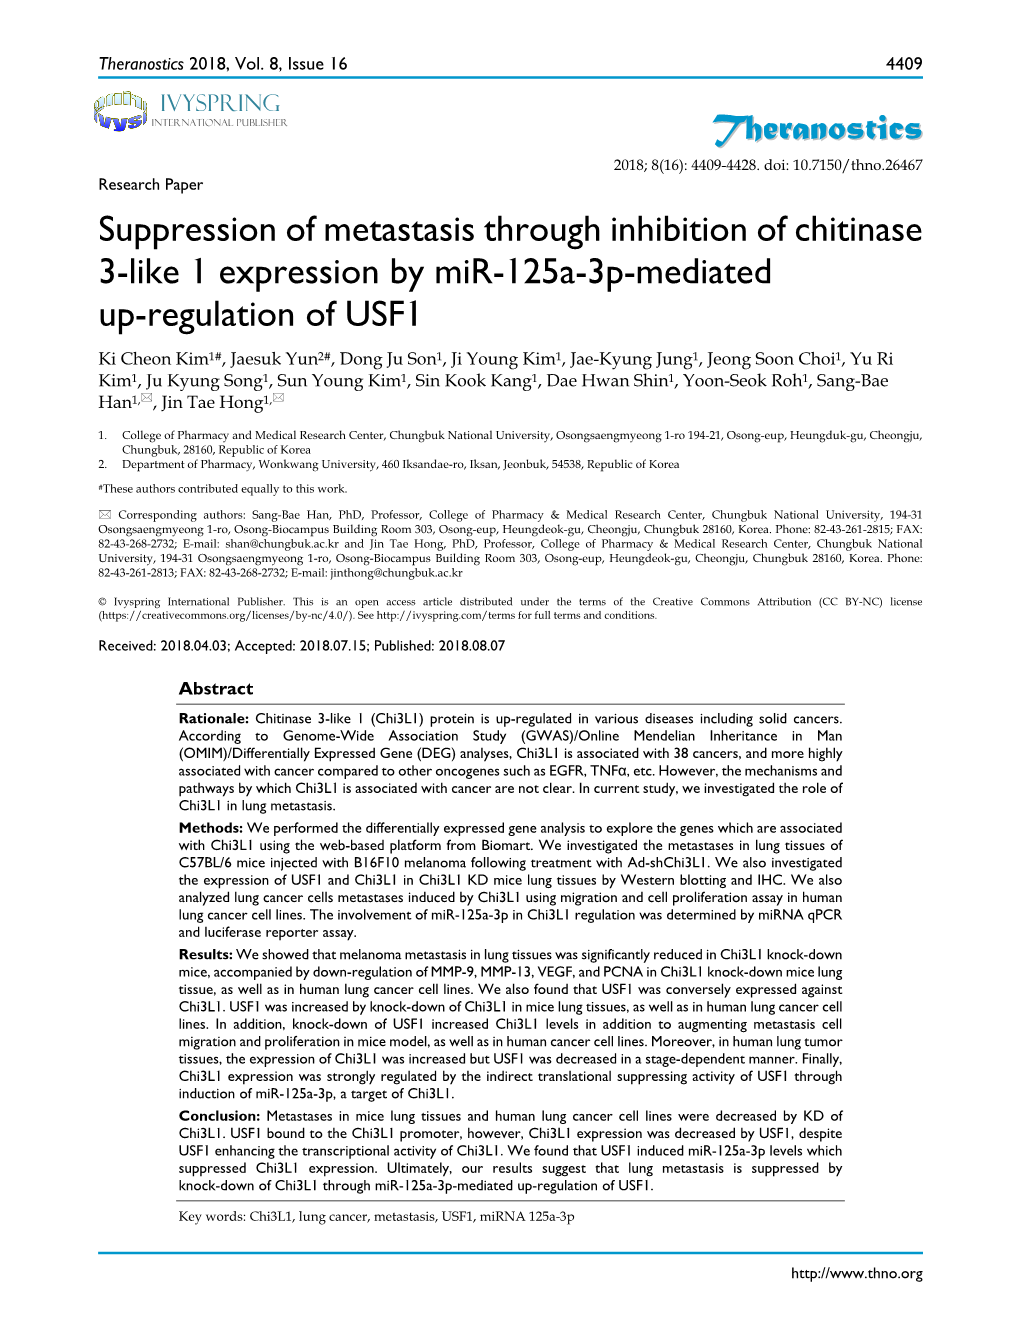 Suppression of Metastasis Through Inhibition of Chitinase 3-Like 1